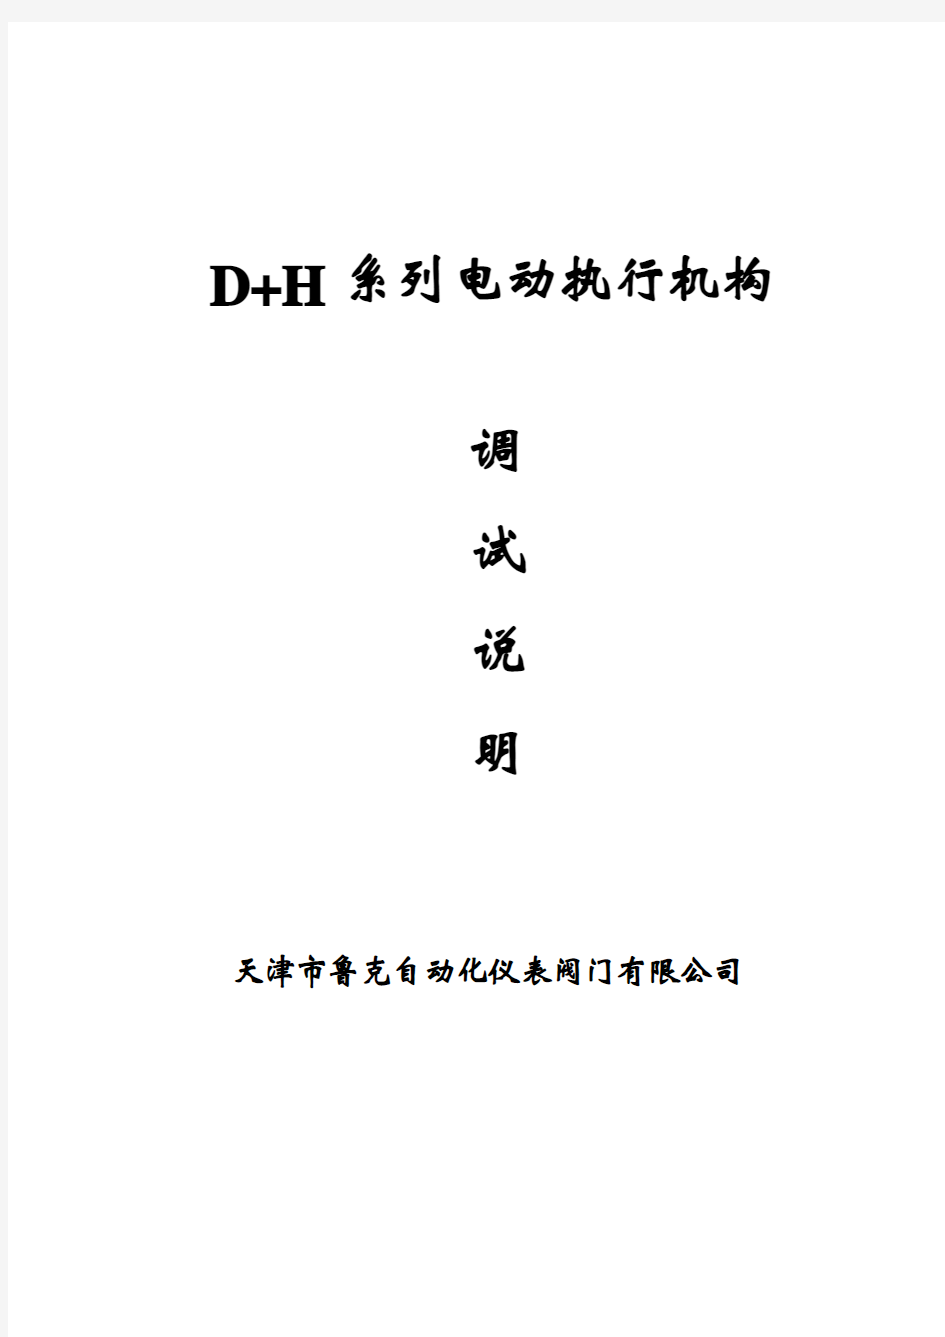 D+H 系列电动执行机构说明书